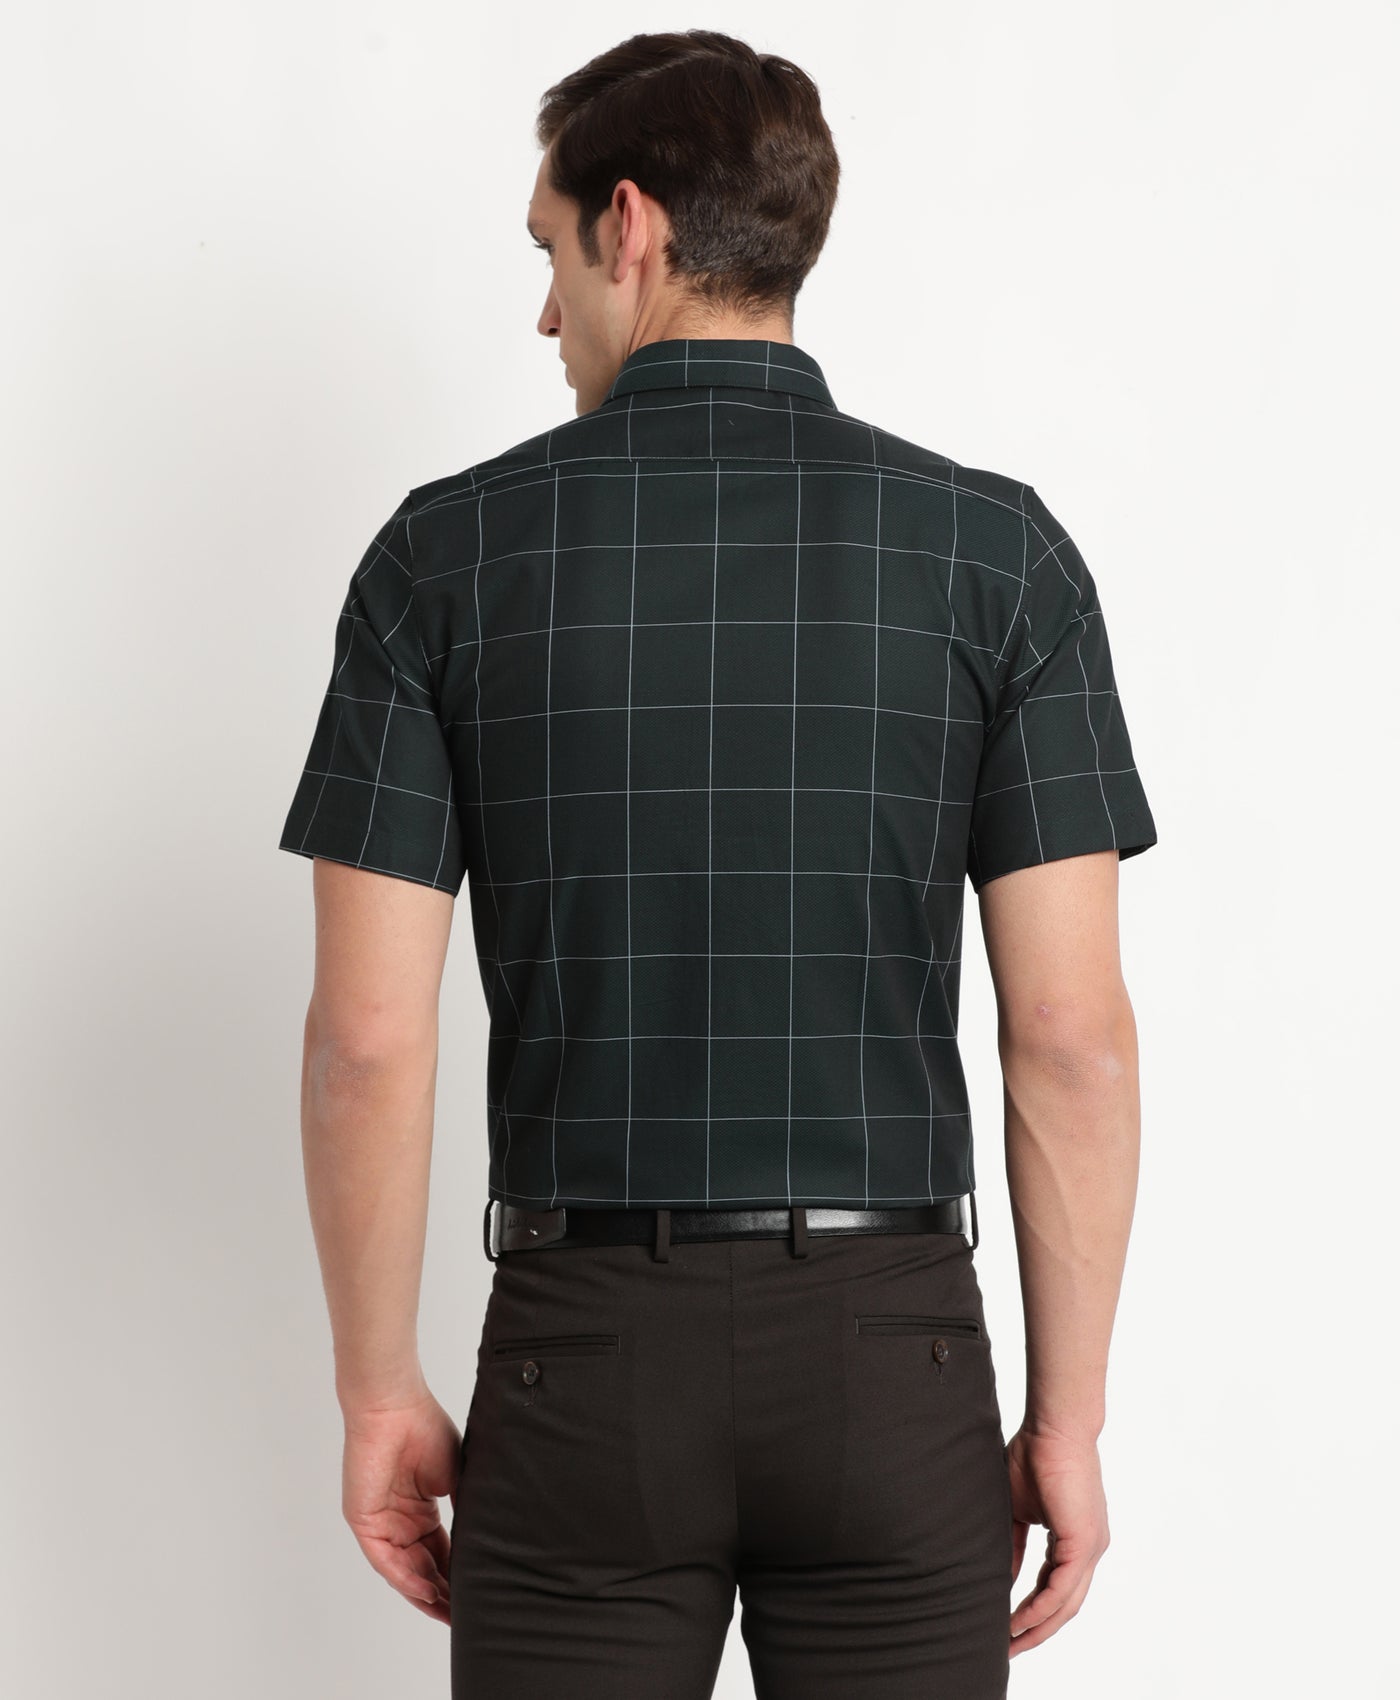 100% Cotton Dark Green Checkered Regular Fit Half Sleeve Formal Shirt